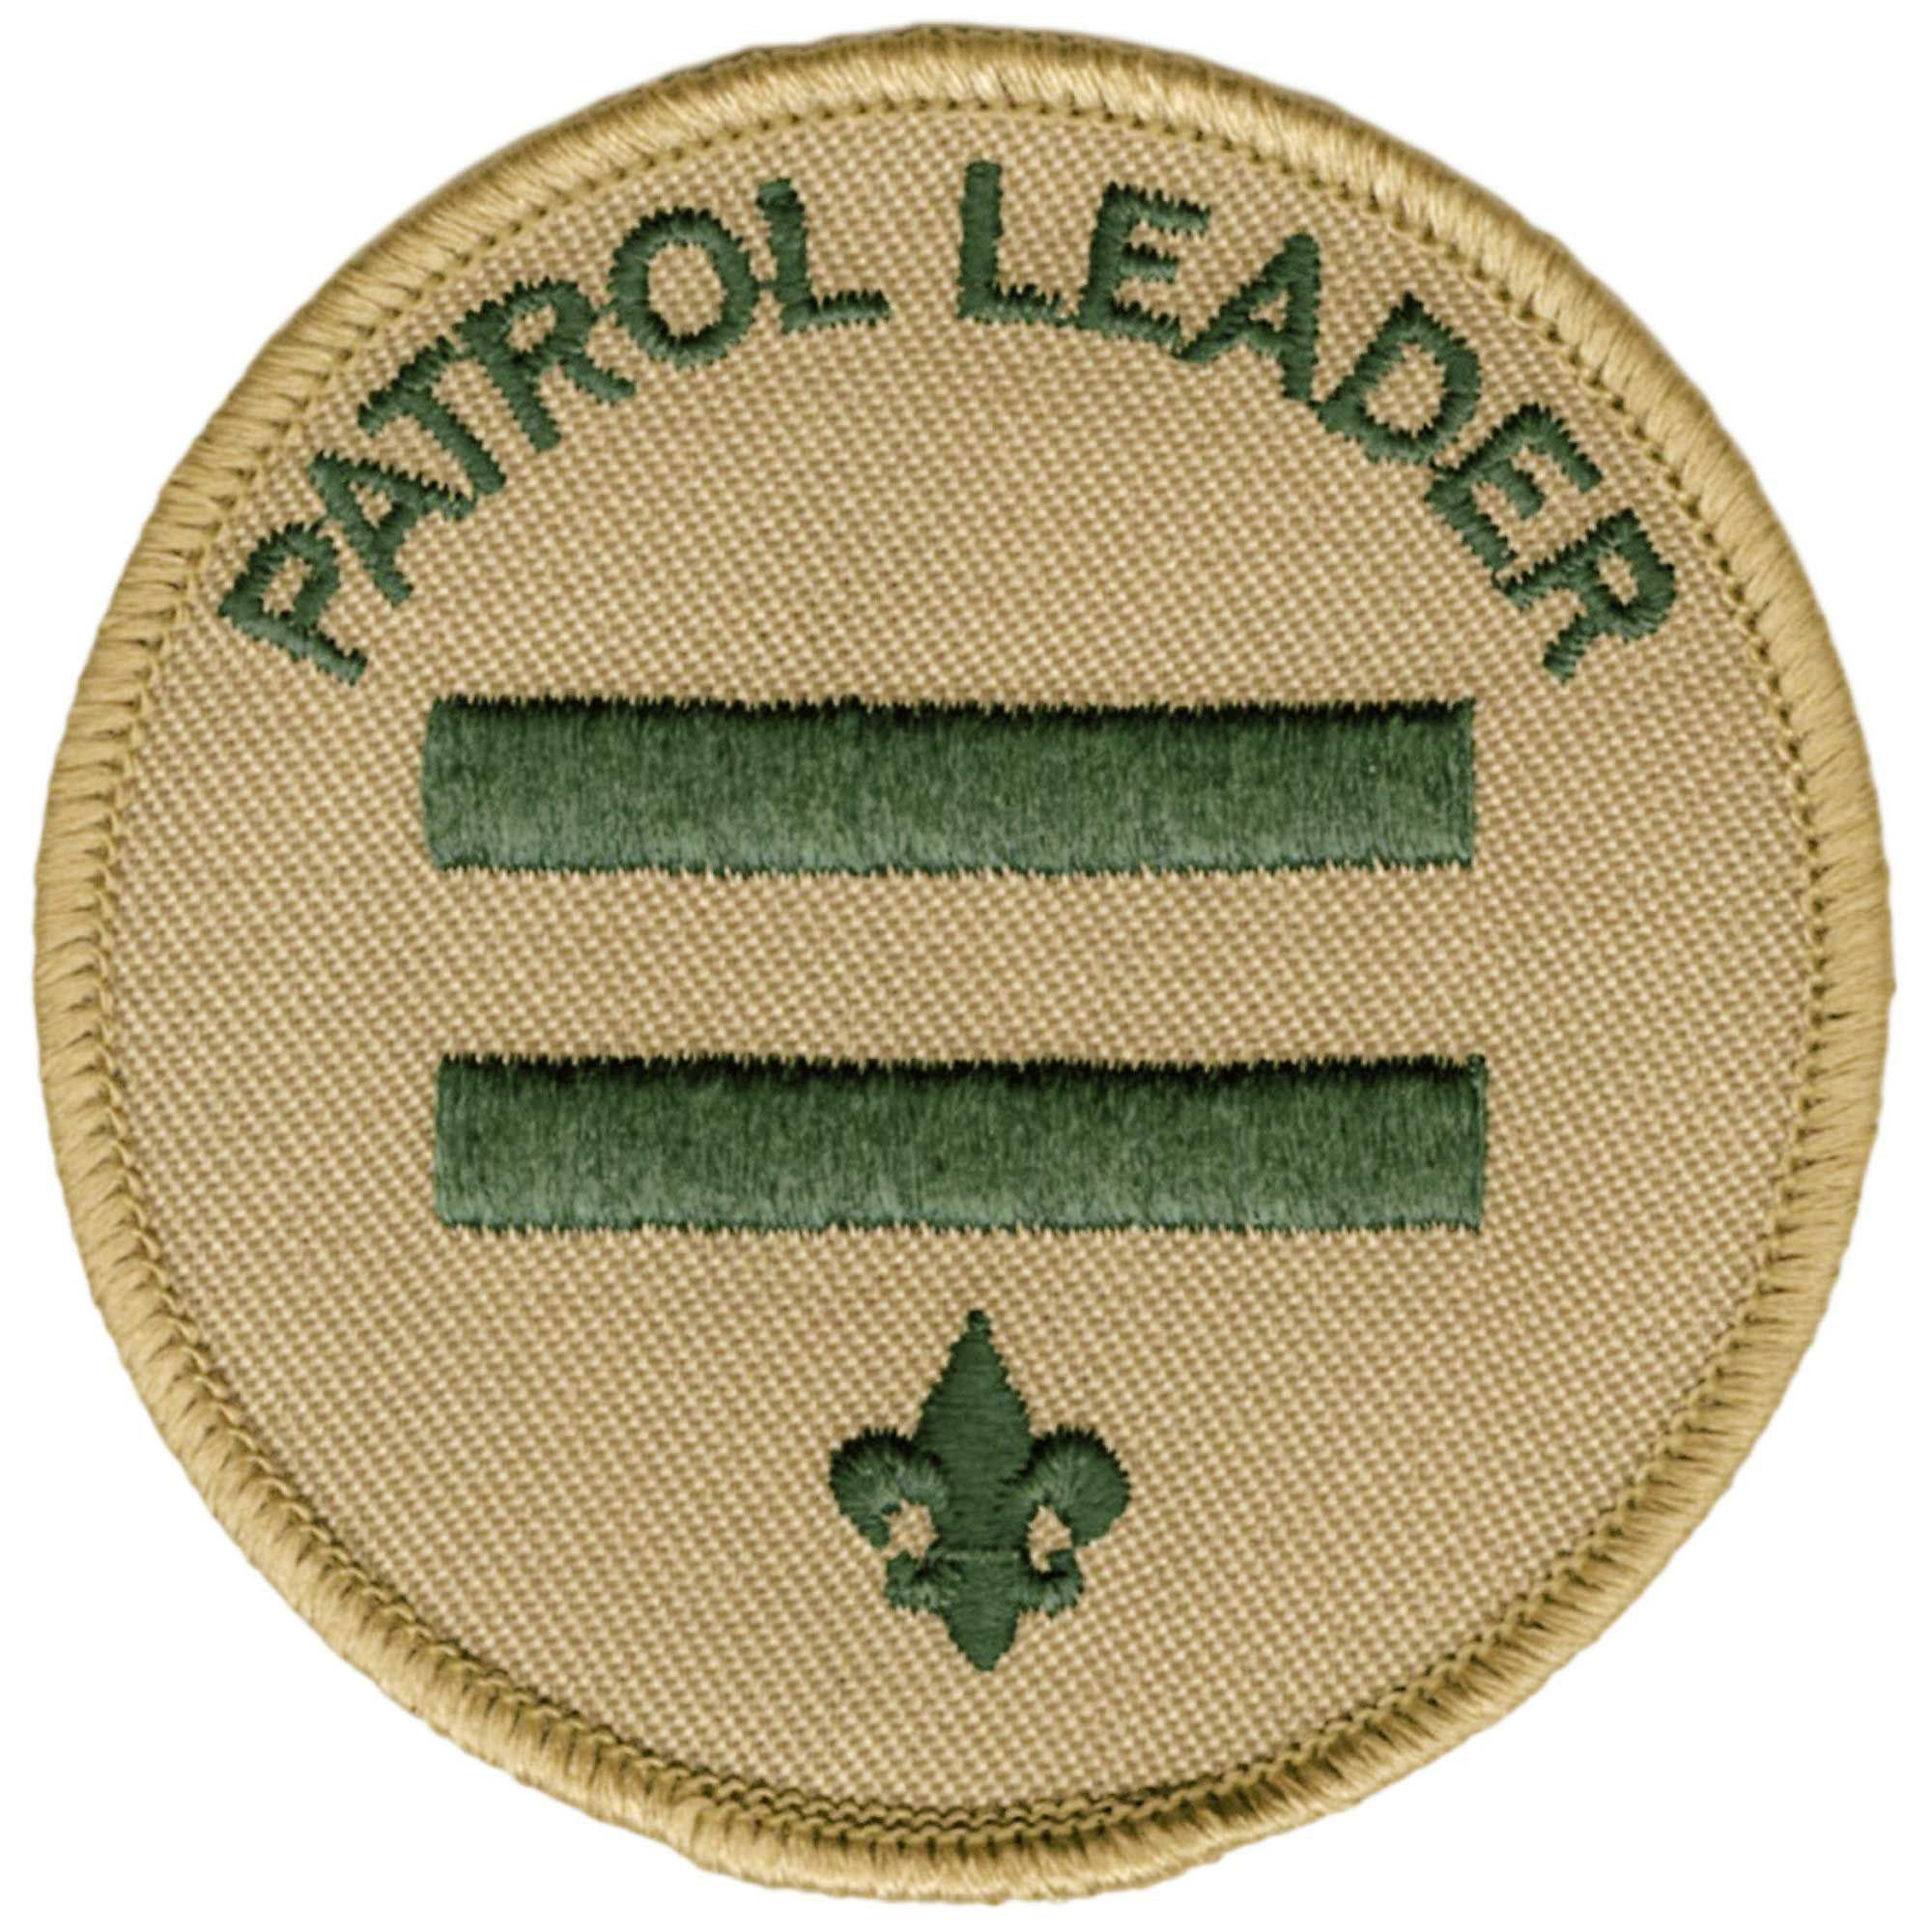 Boy Scout Troop Historian Position Boy Scout Patch Tan Background BSA